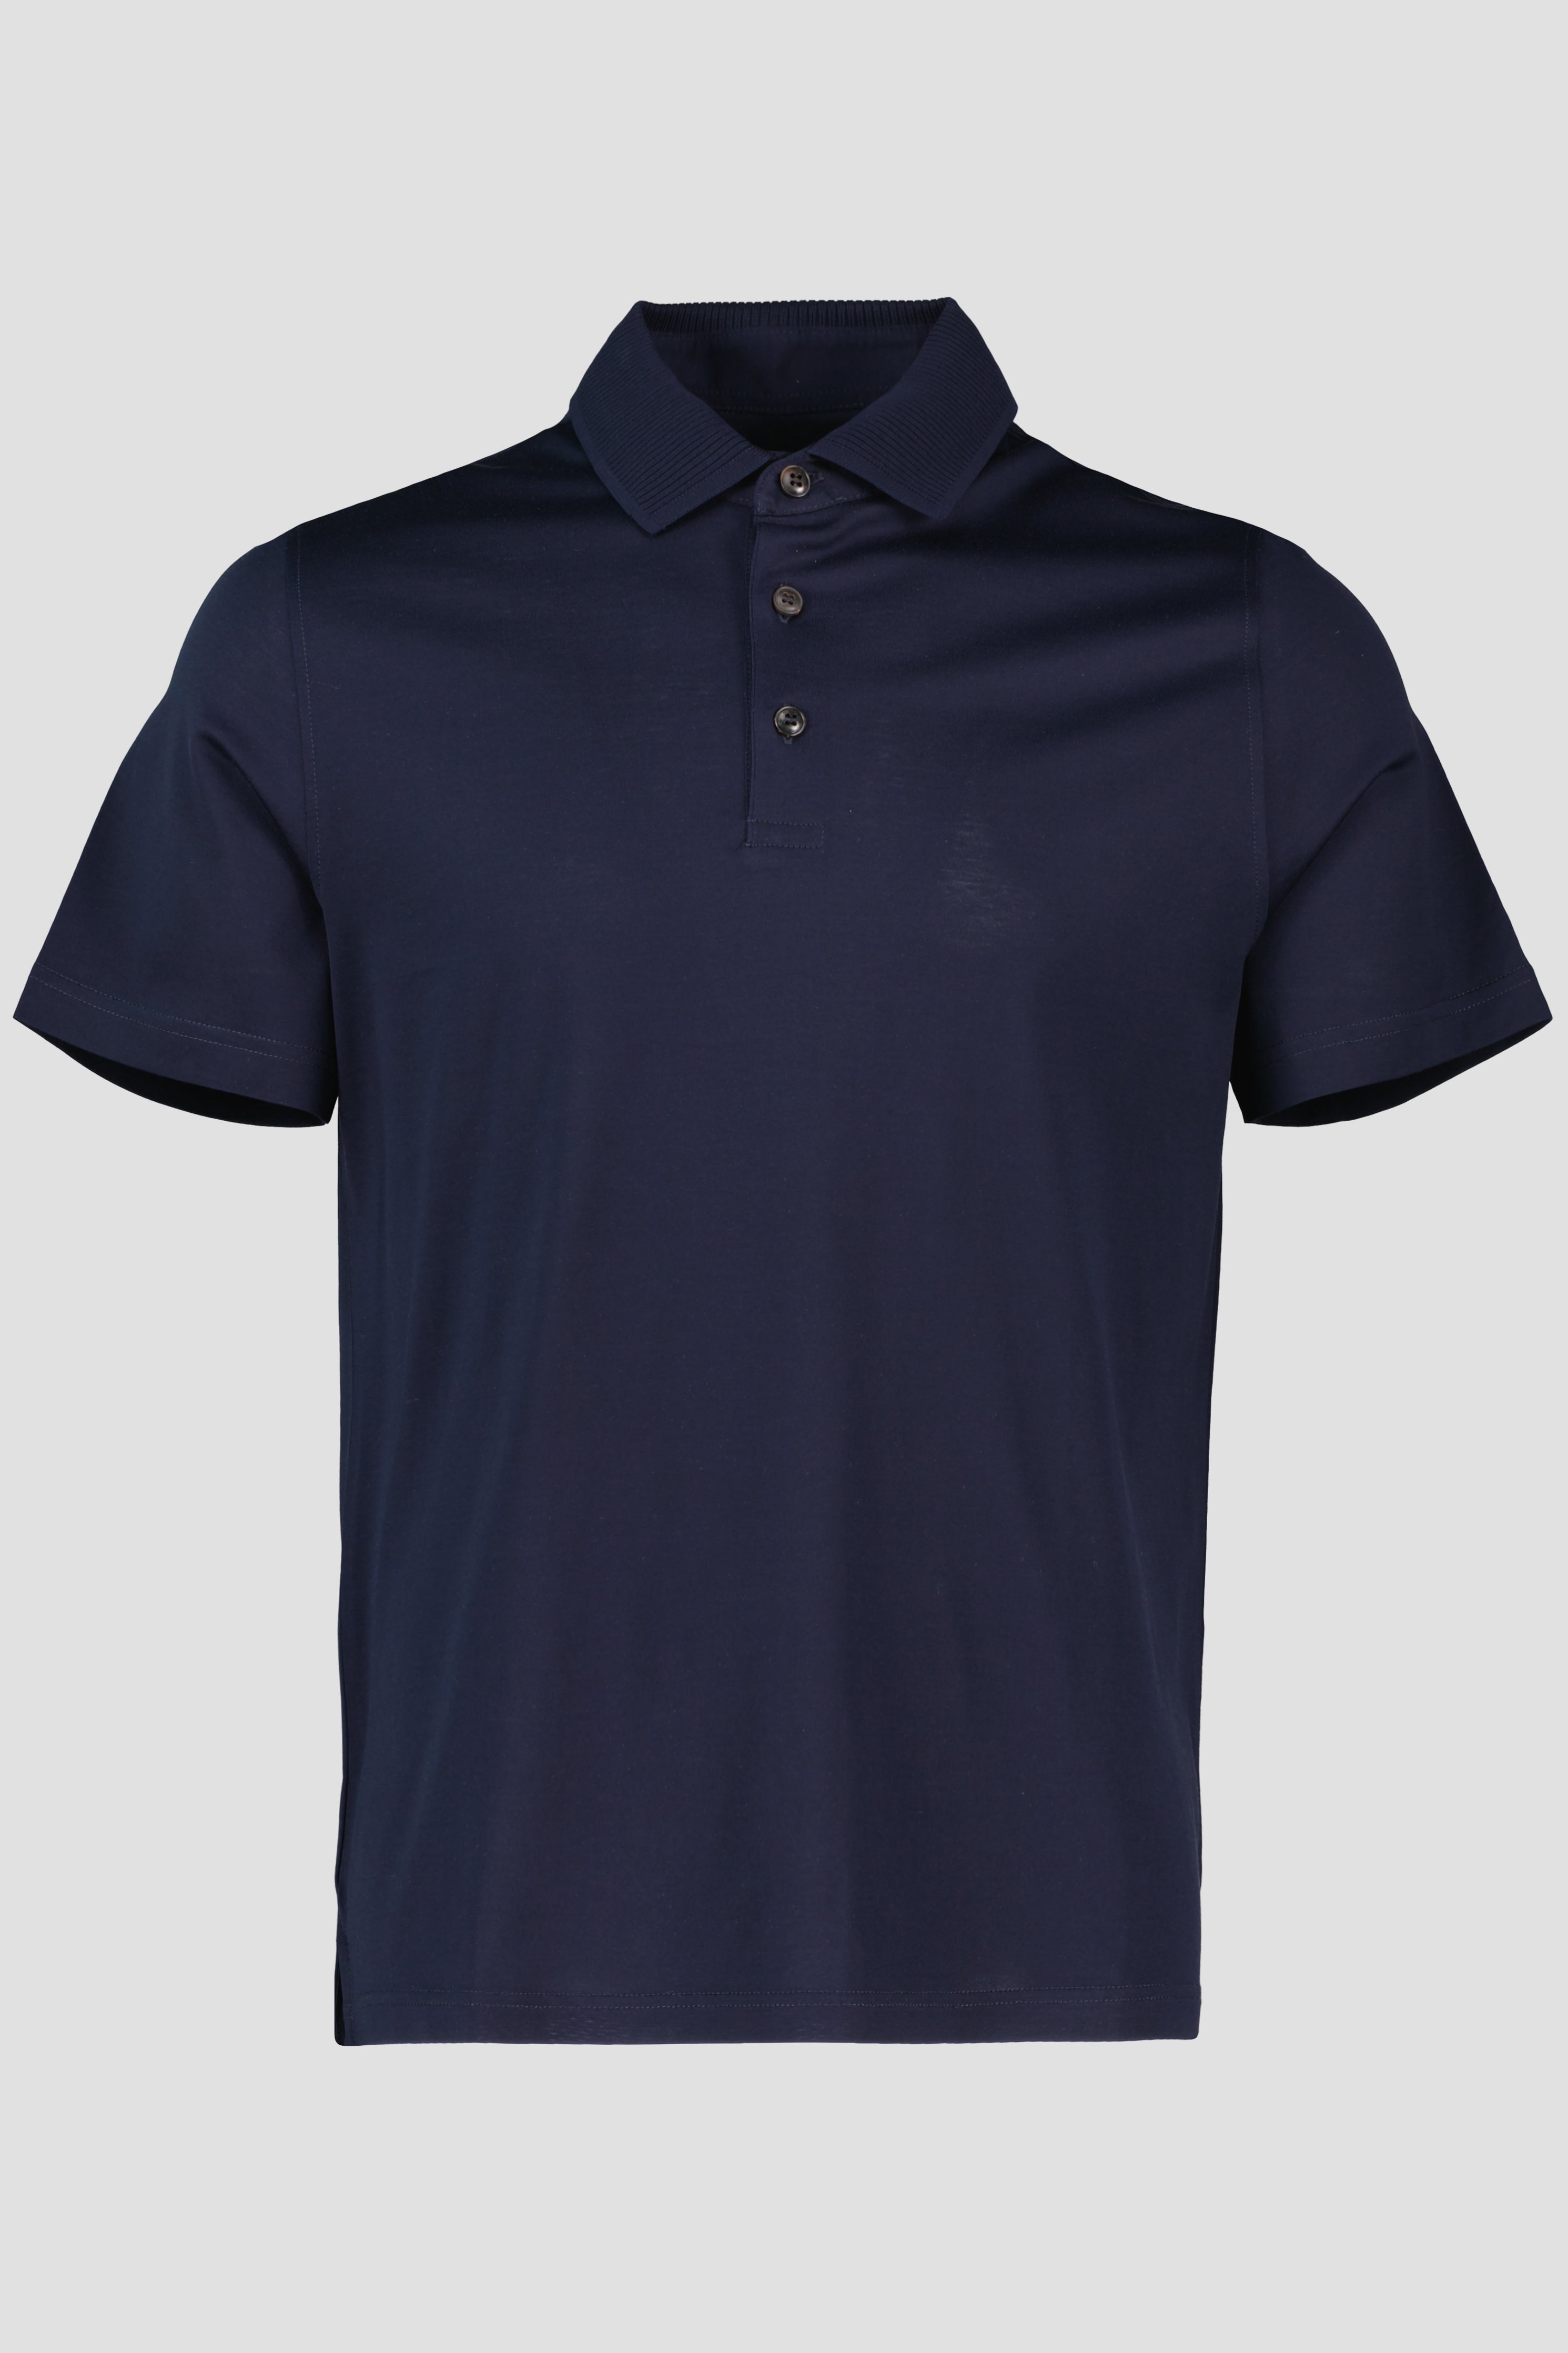 Men's Pal Zileri Mercerised Navy Polo Shirt